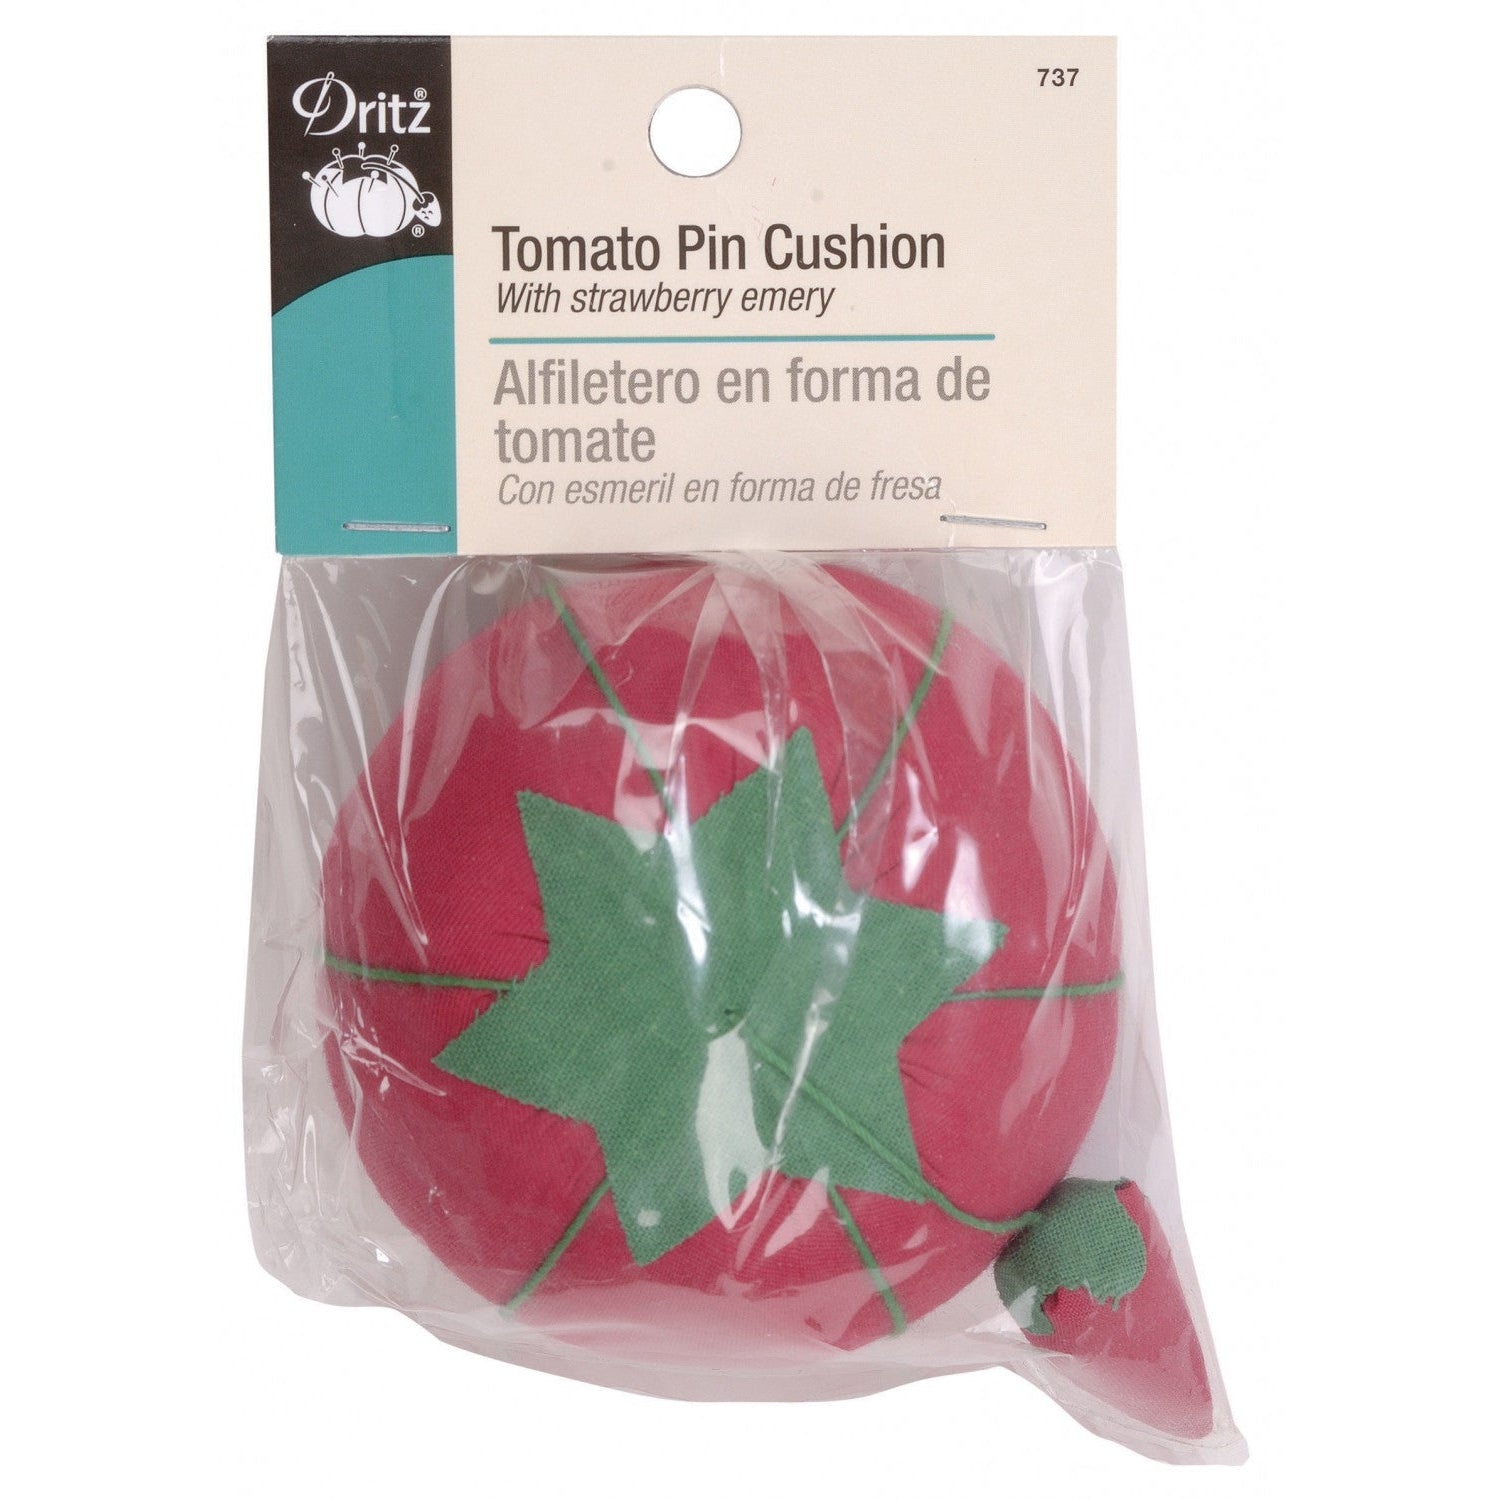 Tomato Pincushion With Strawberry Emery